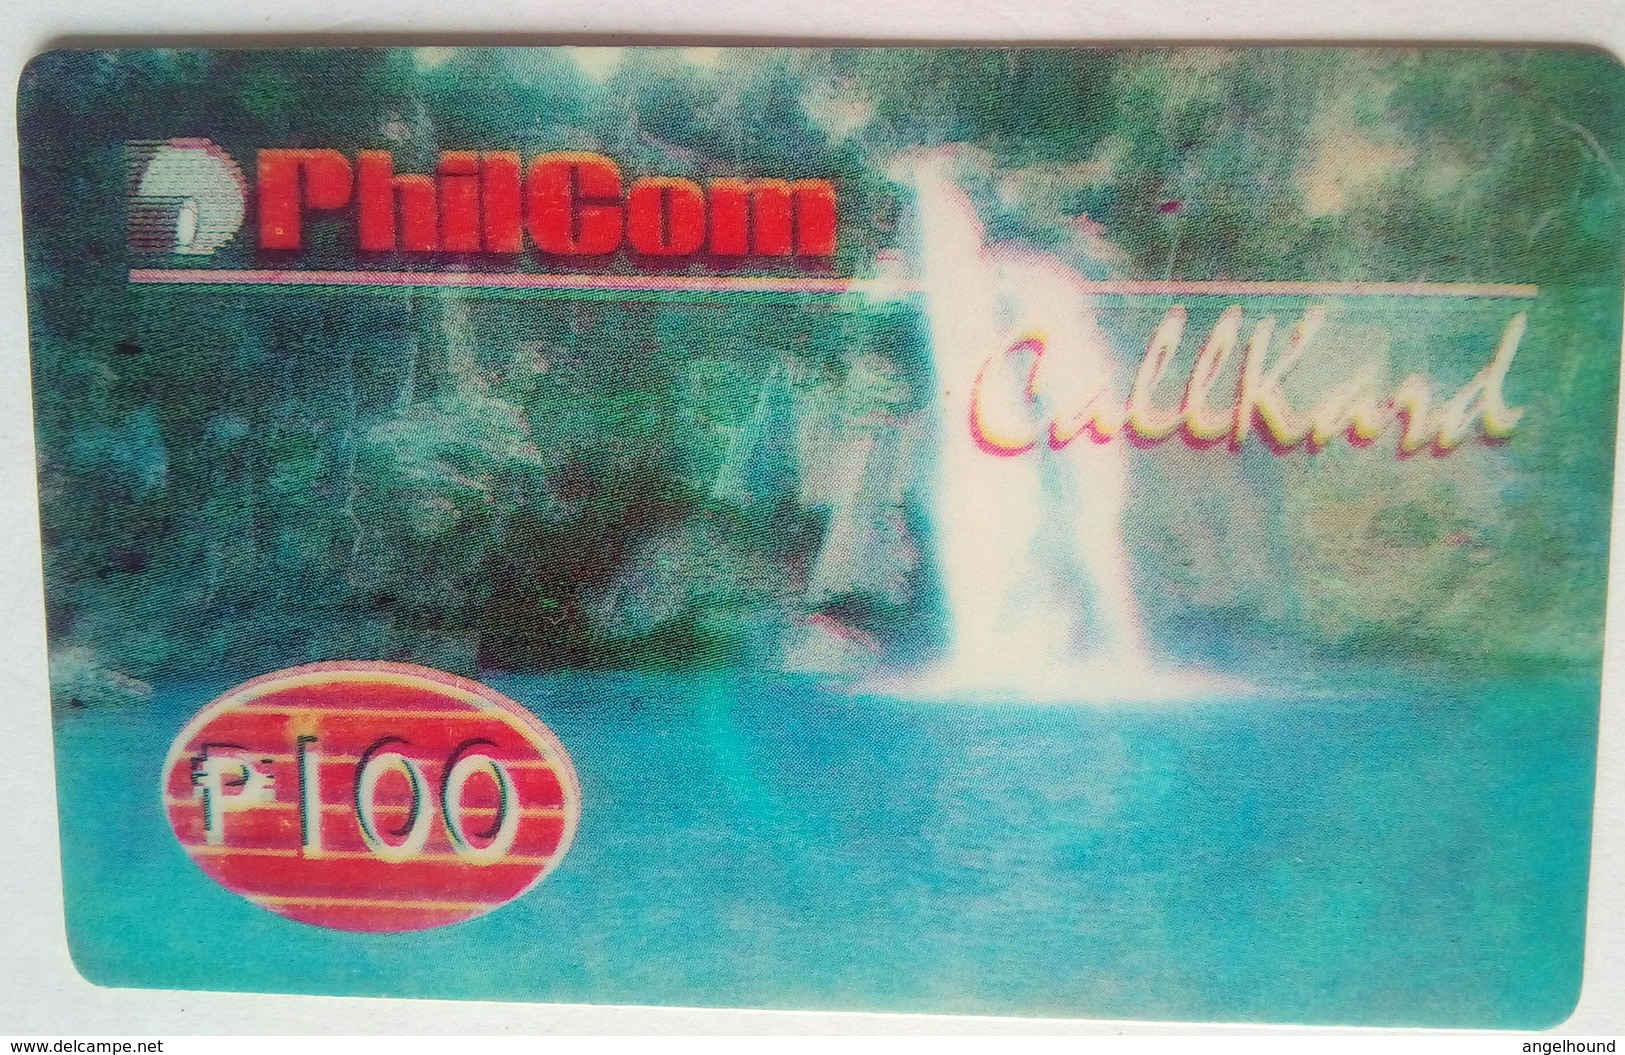 Philcom 100 Pesos Waterfalls - Philippines